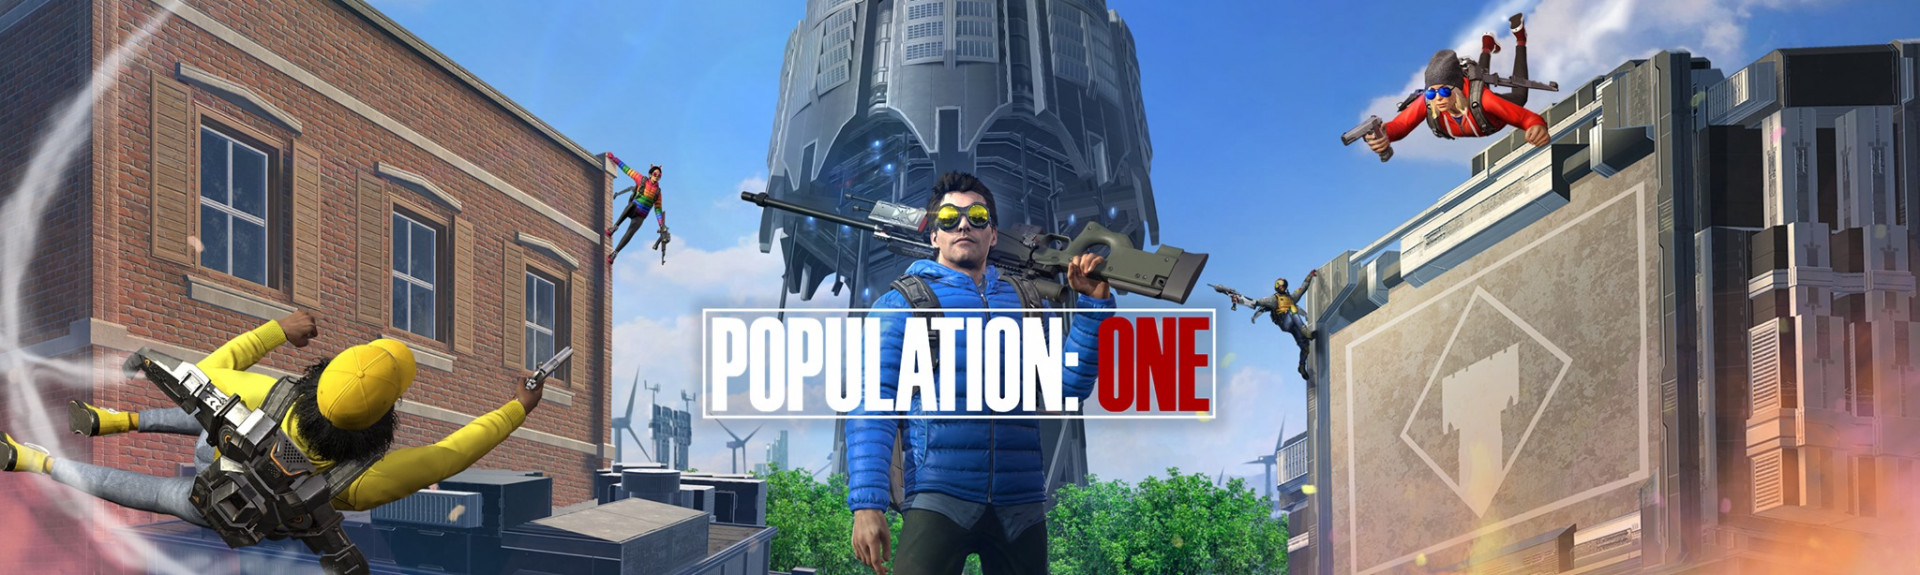 Population: One - ANÁLISIS